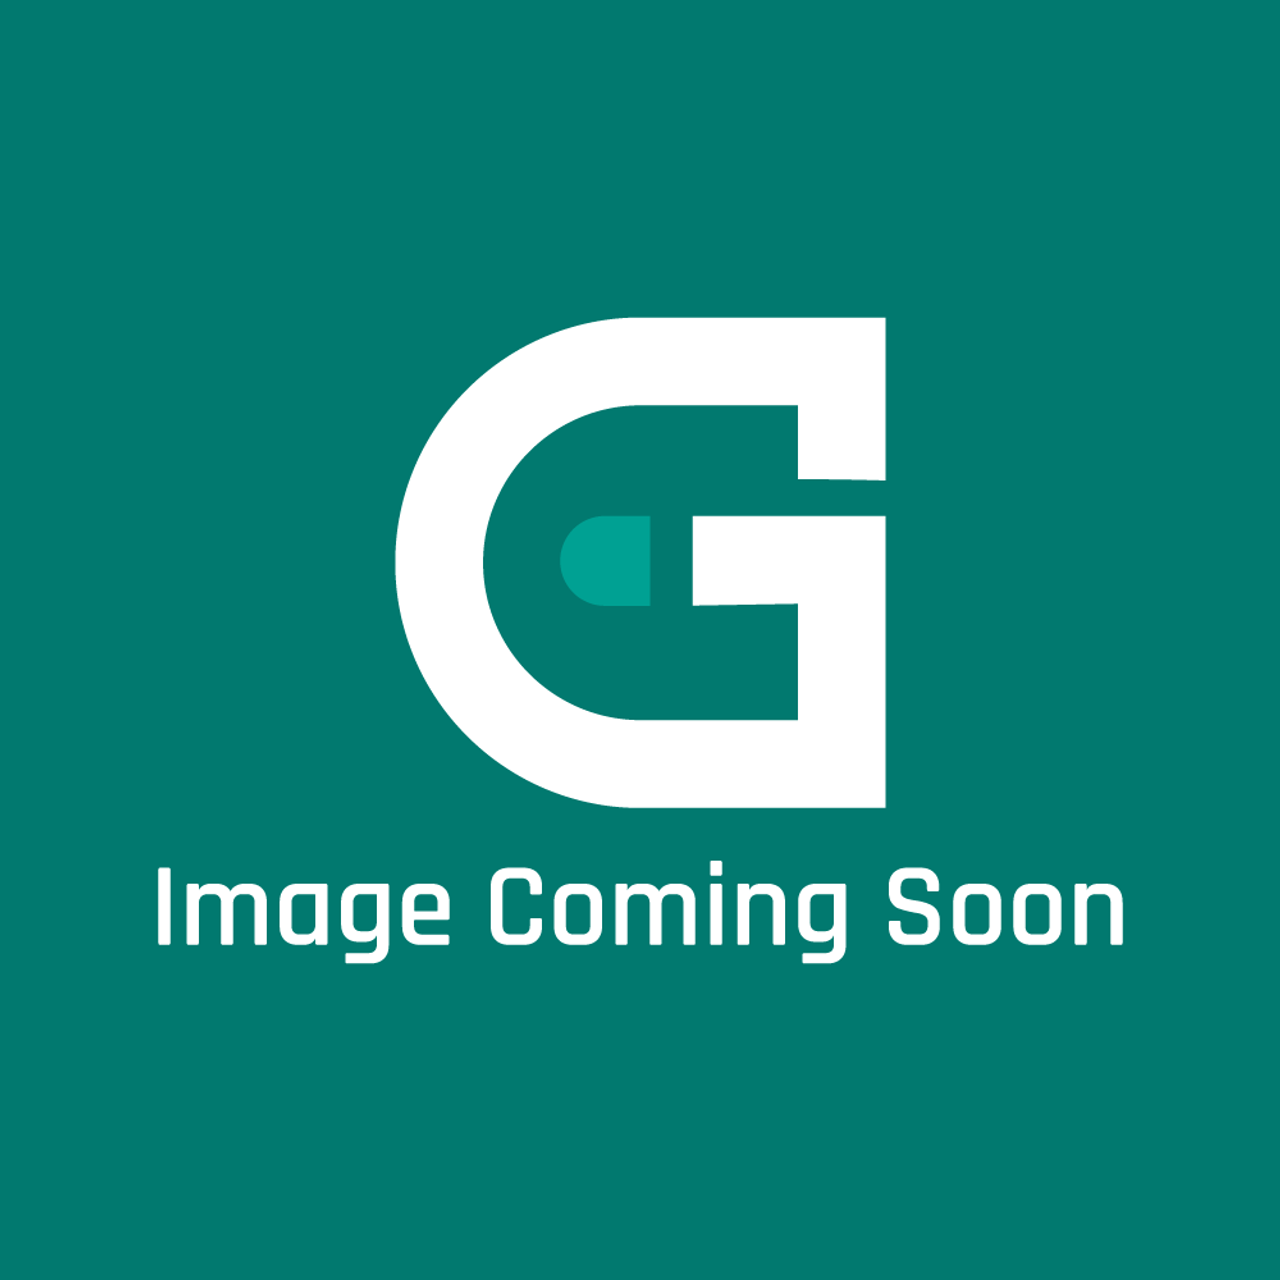 Viking G3296906WHBR - FZ DOOR ASSY 48" SXS W/DISP *W - Image Coming Soon!